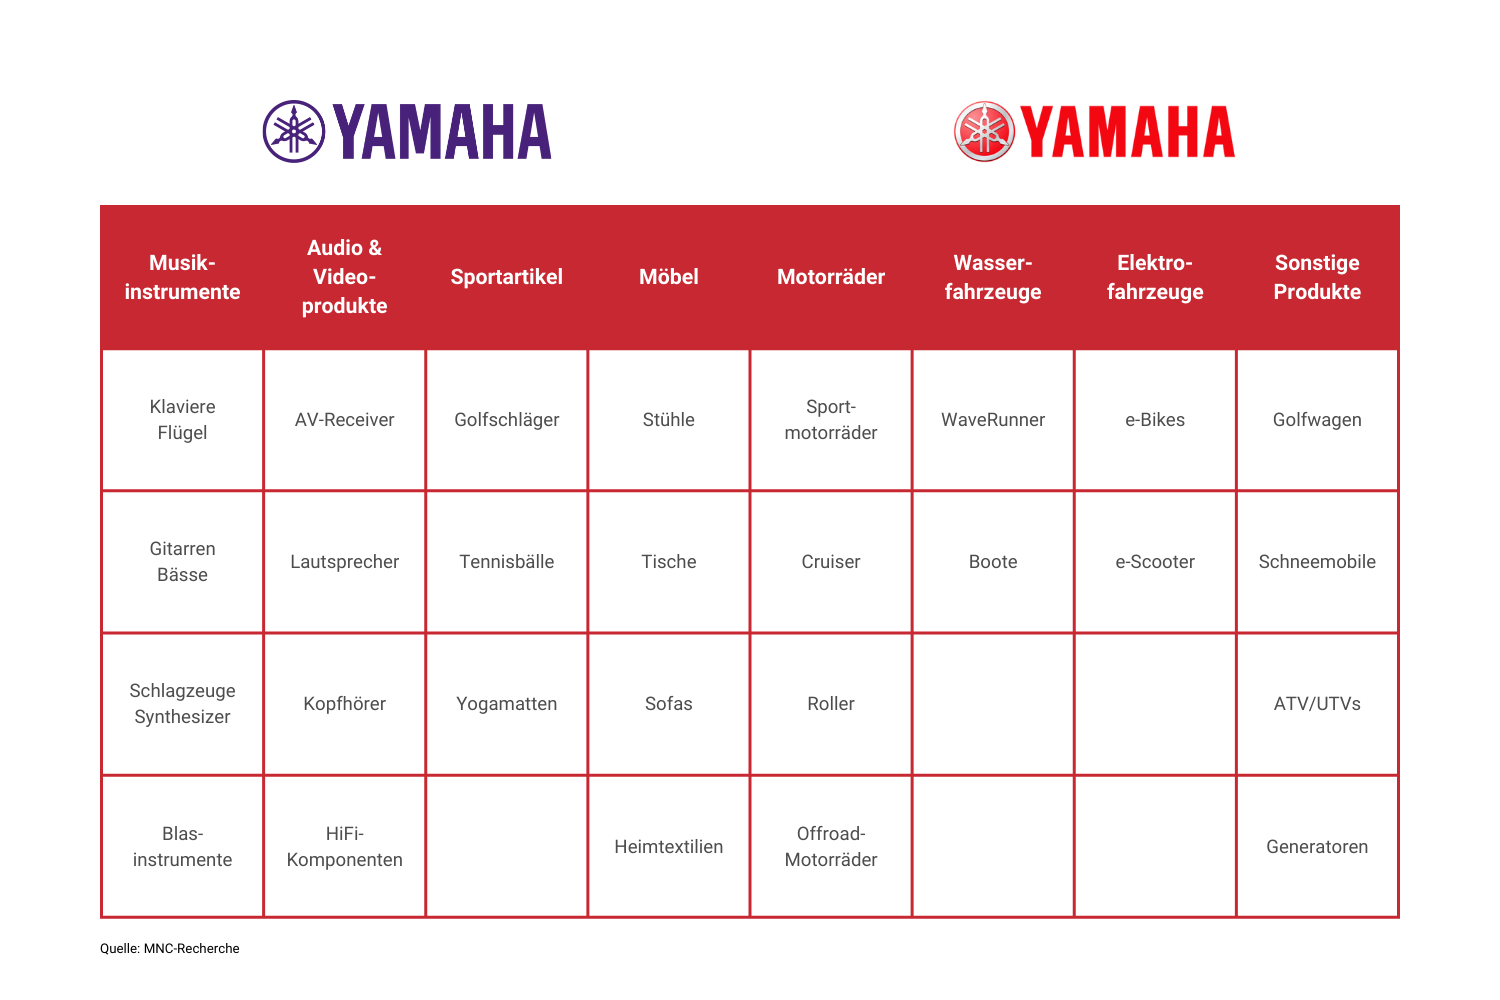 Vielfalt der Marke Yamaha